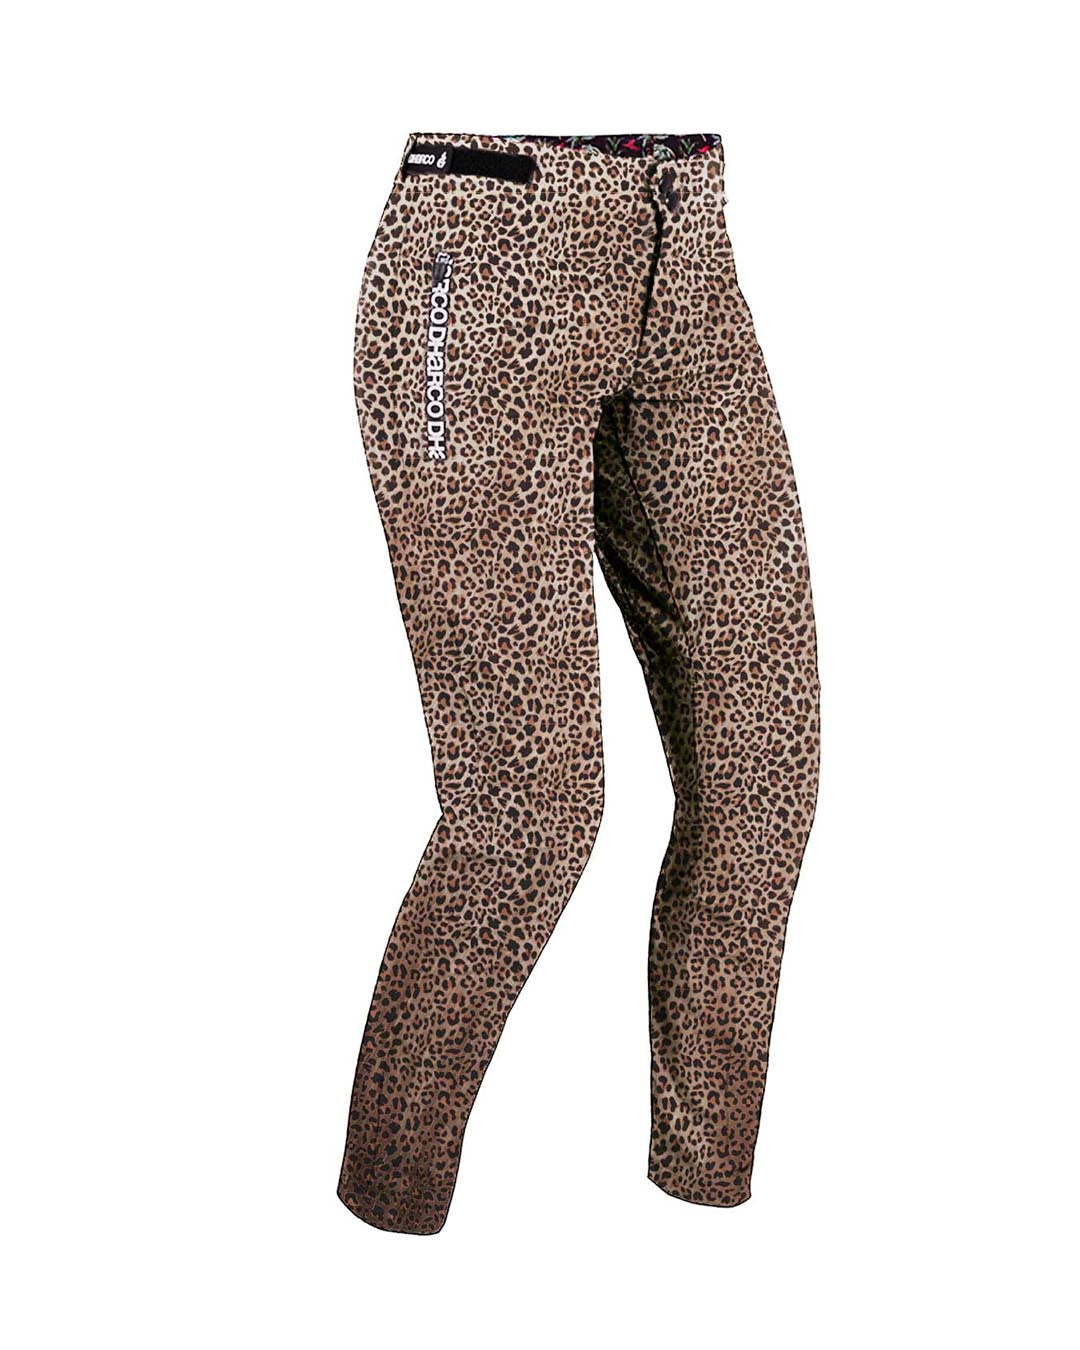 Womens MTB Gravity Pants - Leopard